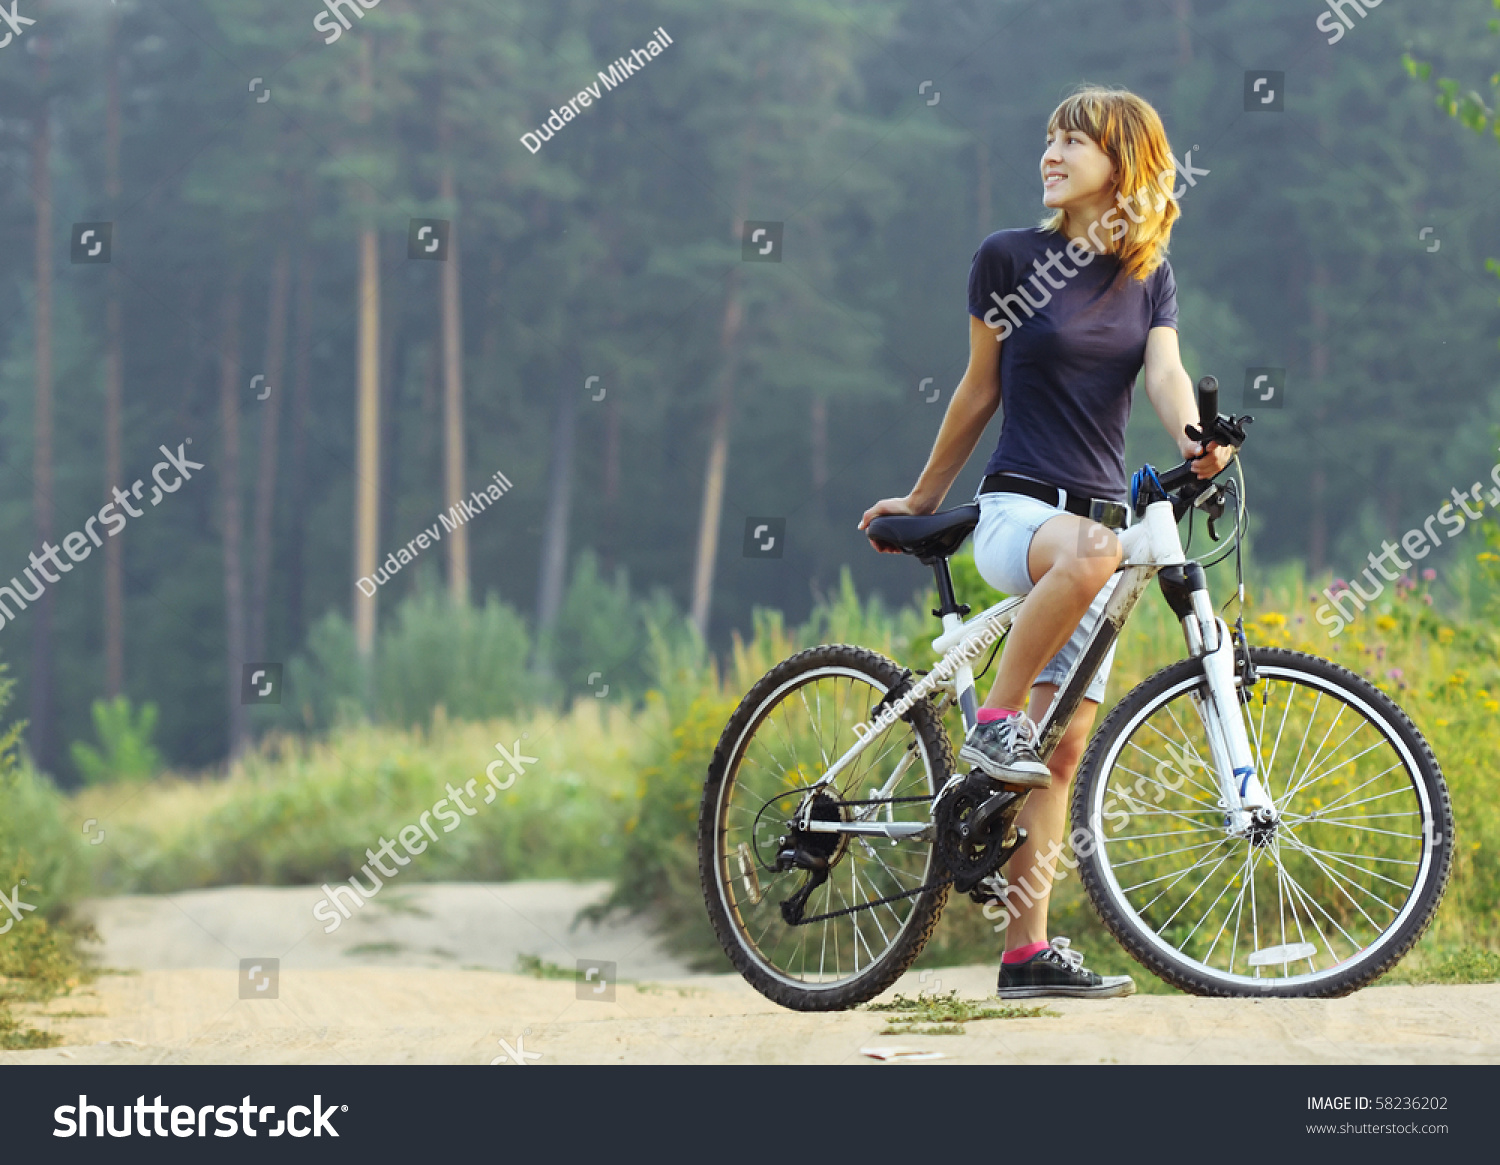 standing on a bike